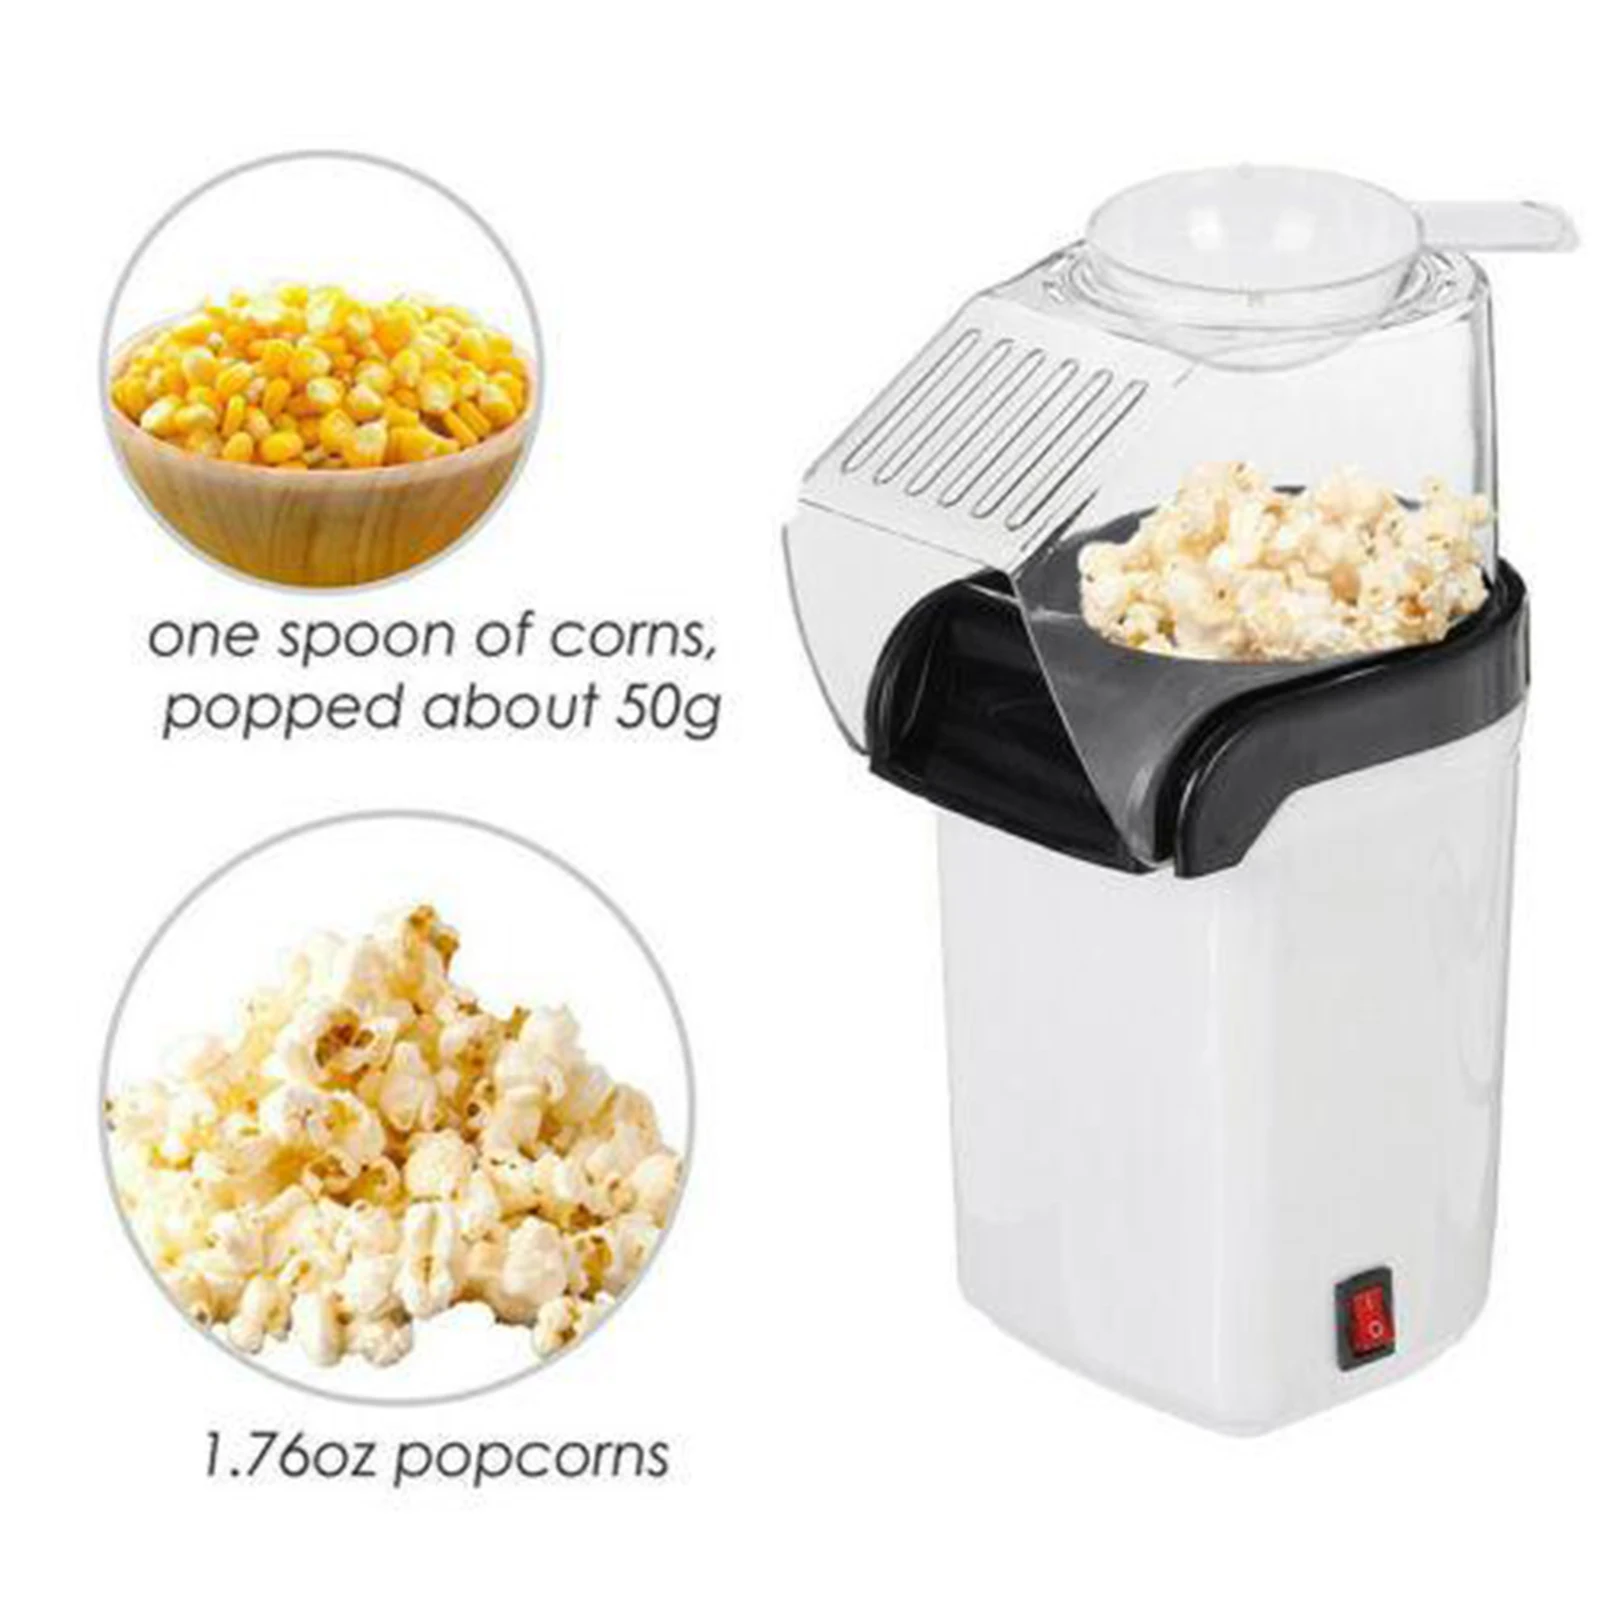 Air Popcorn Popper Maker, Electric Hot Air Popcorn Machine-1200W, Oil-Free for Home